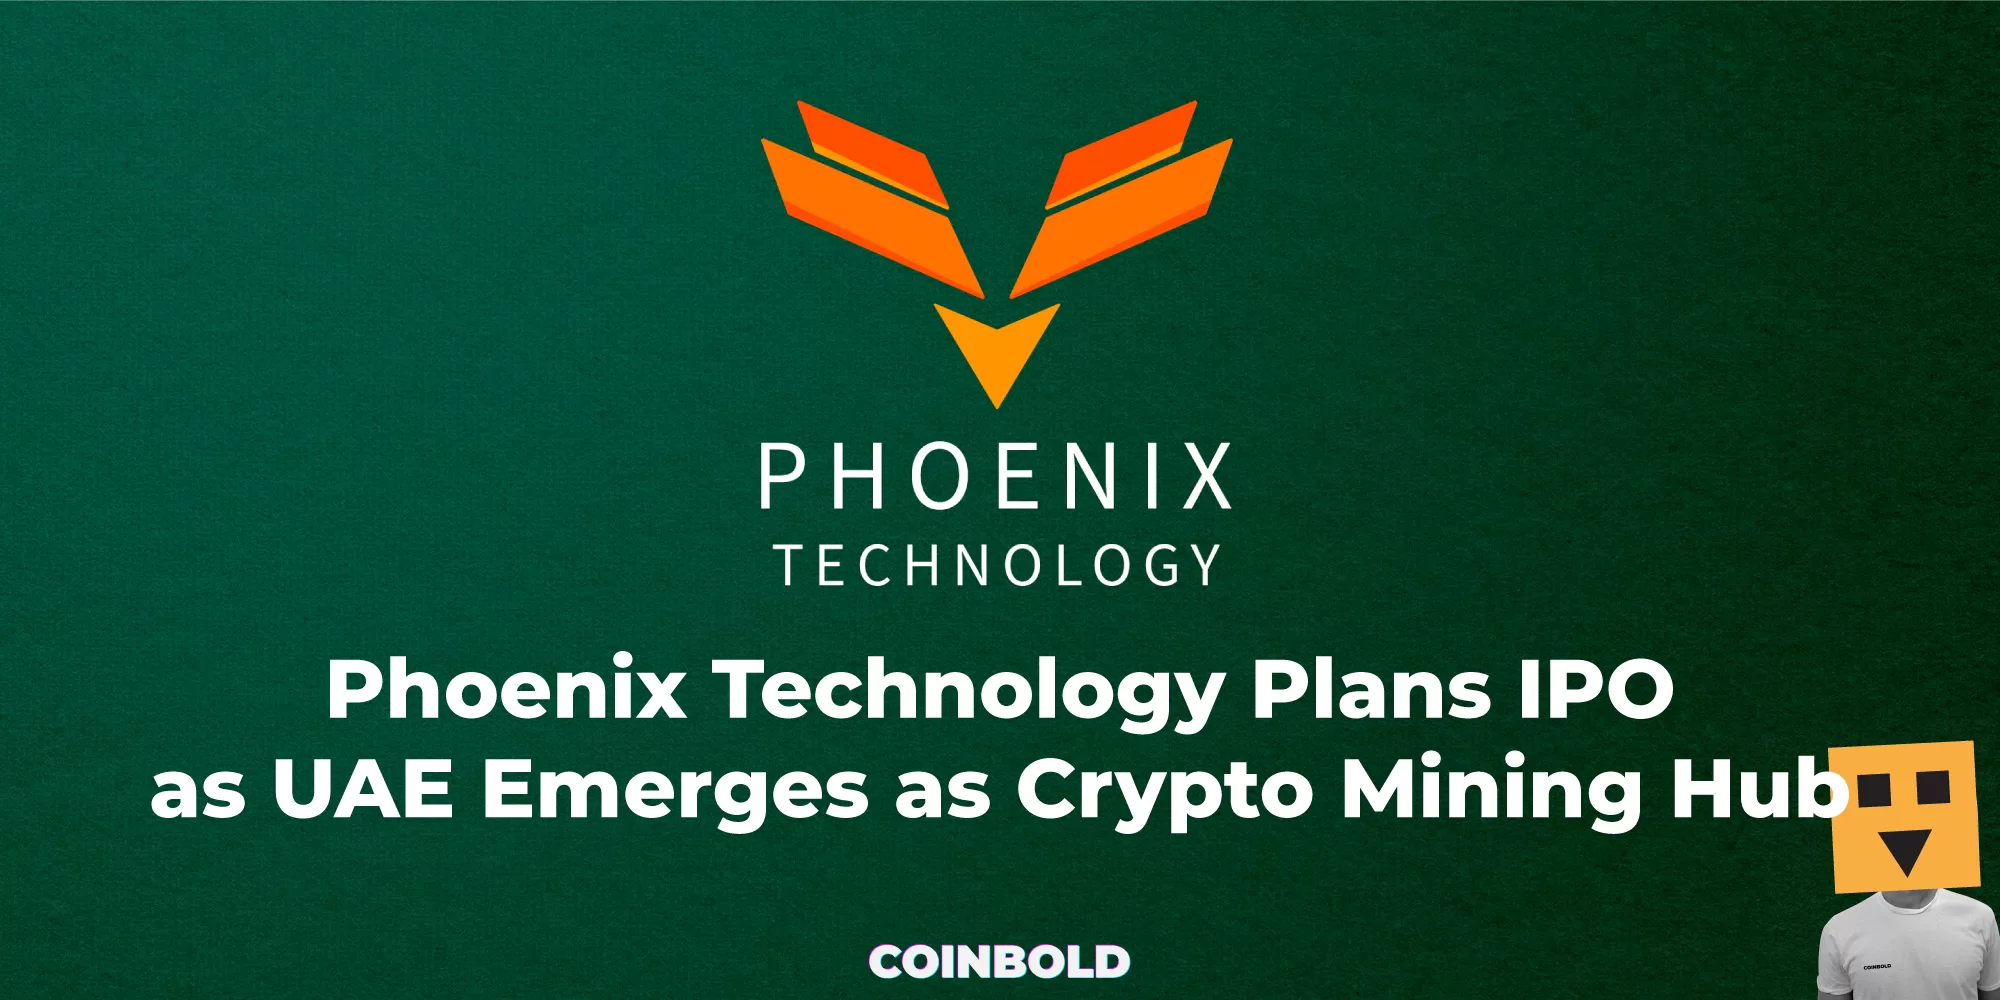 Phoenix Technology Plans IPO as UAE Emerges as Crypto Mining Hub